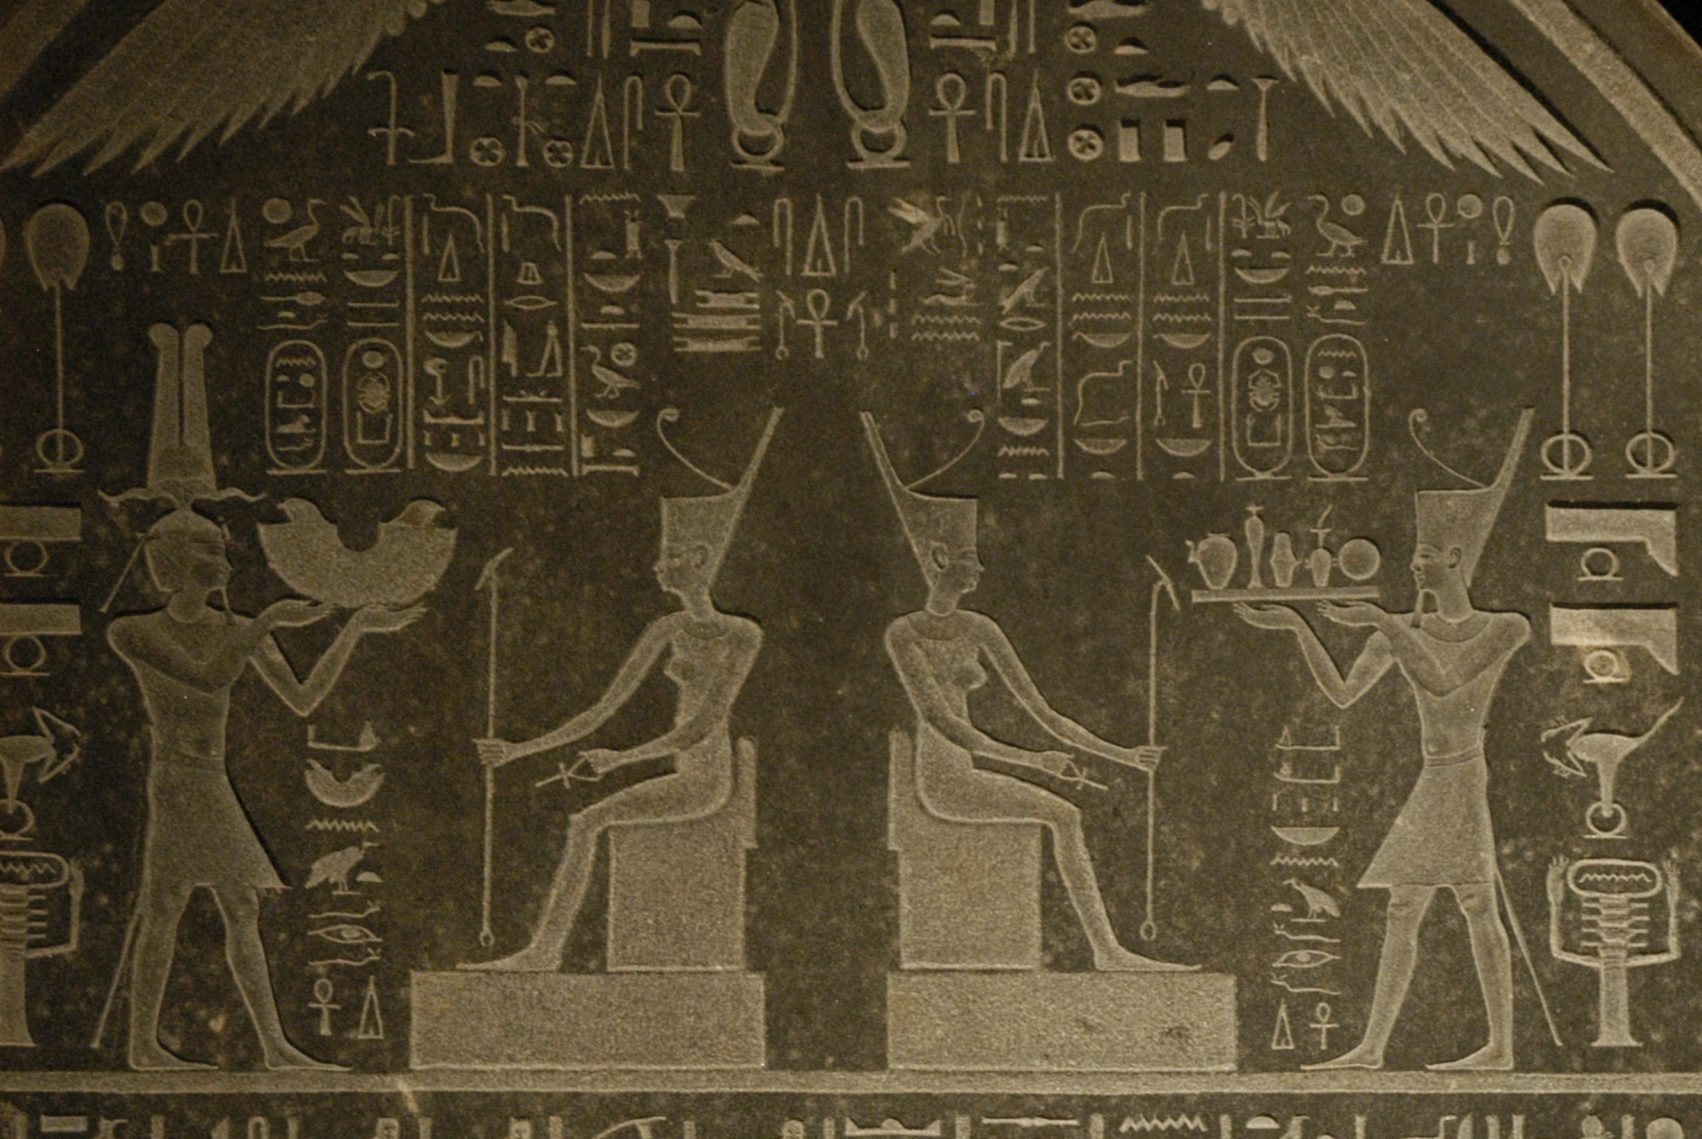 Egypt. Stele of Herakleion-Thonis. The Naucratis decree (380 B.C.) by Pharaoh Nectanebo I.